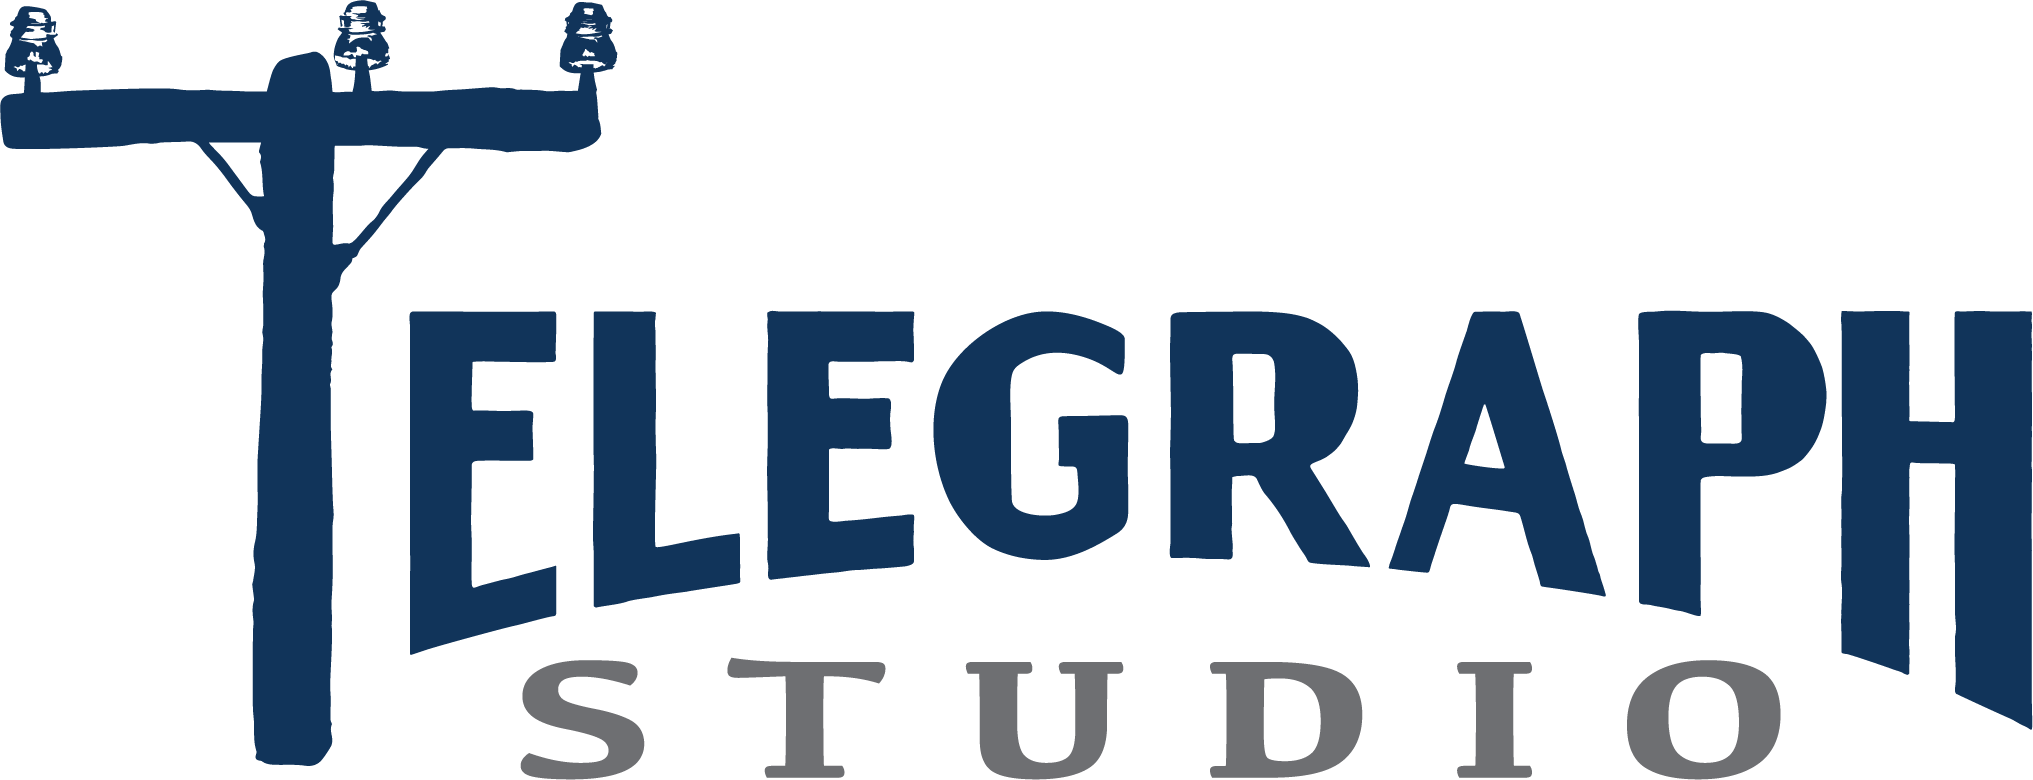 Telegraph Studio